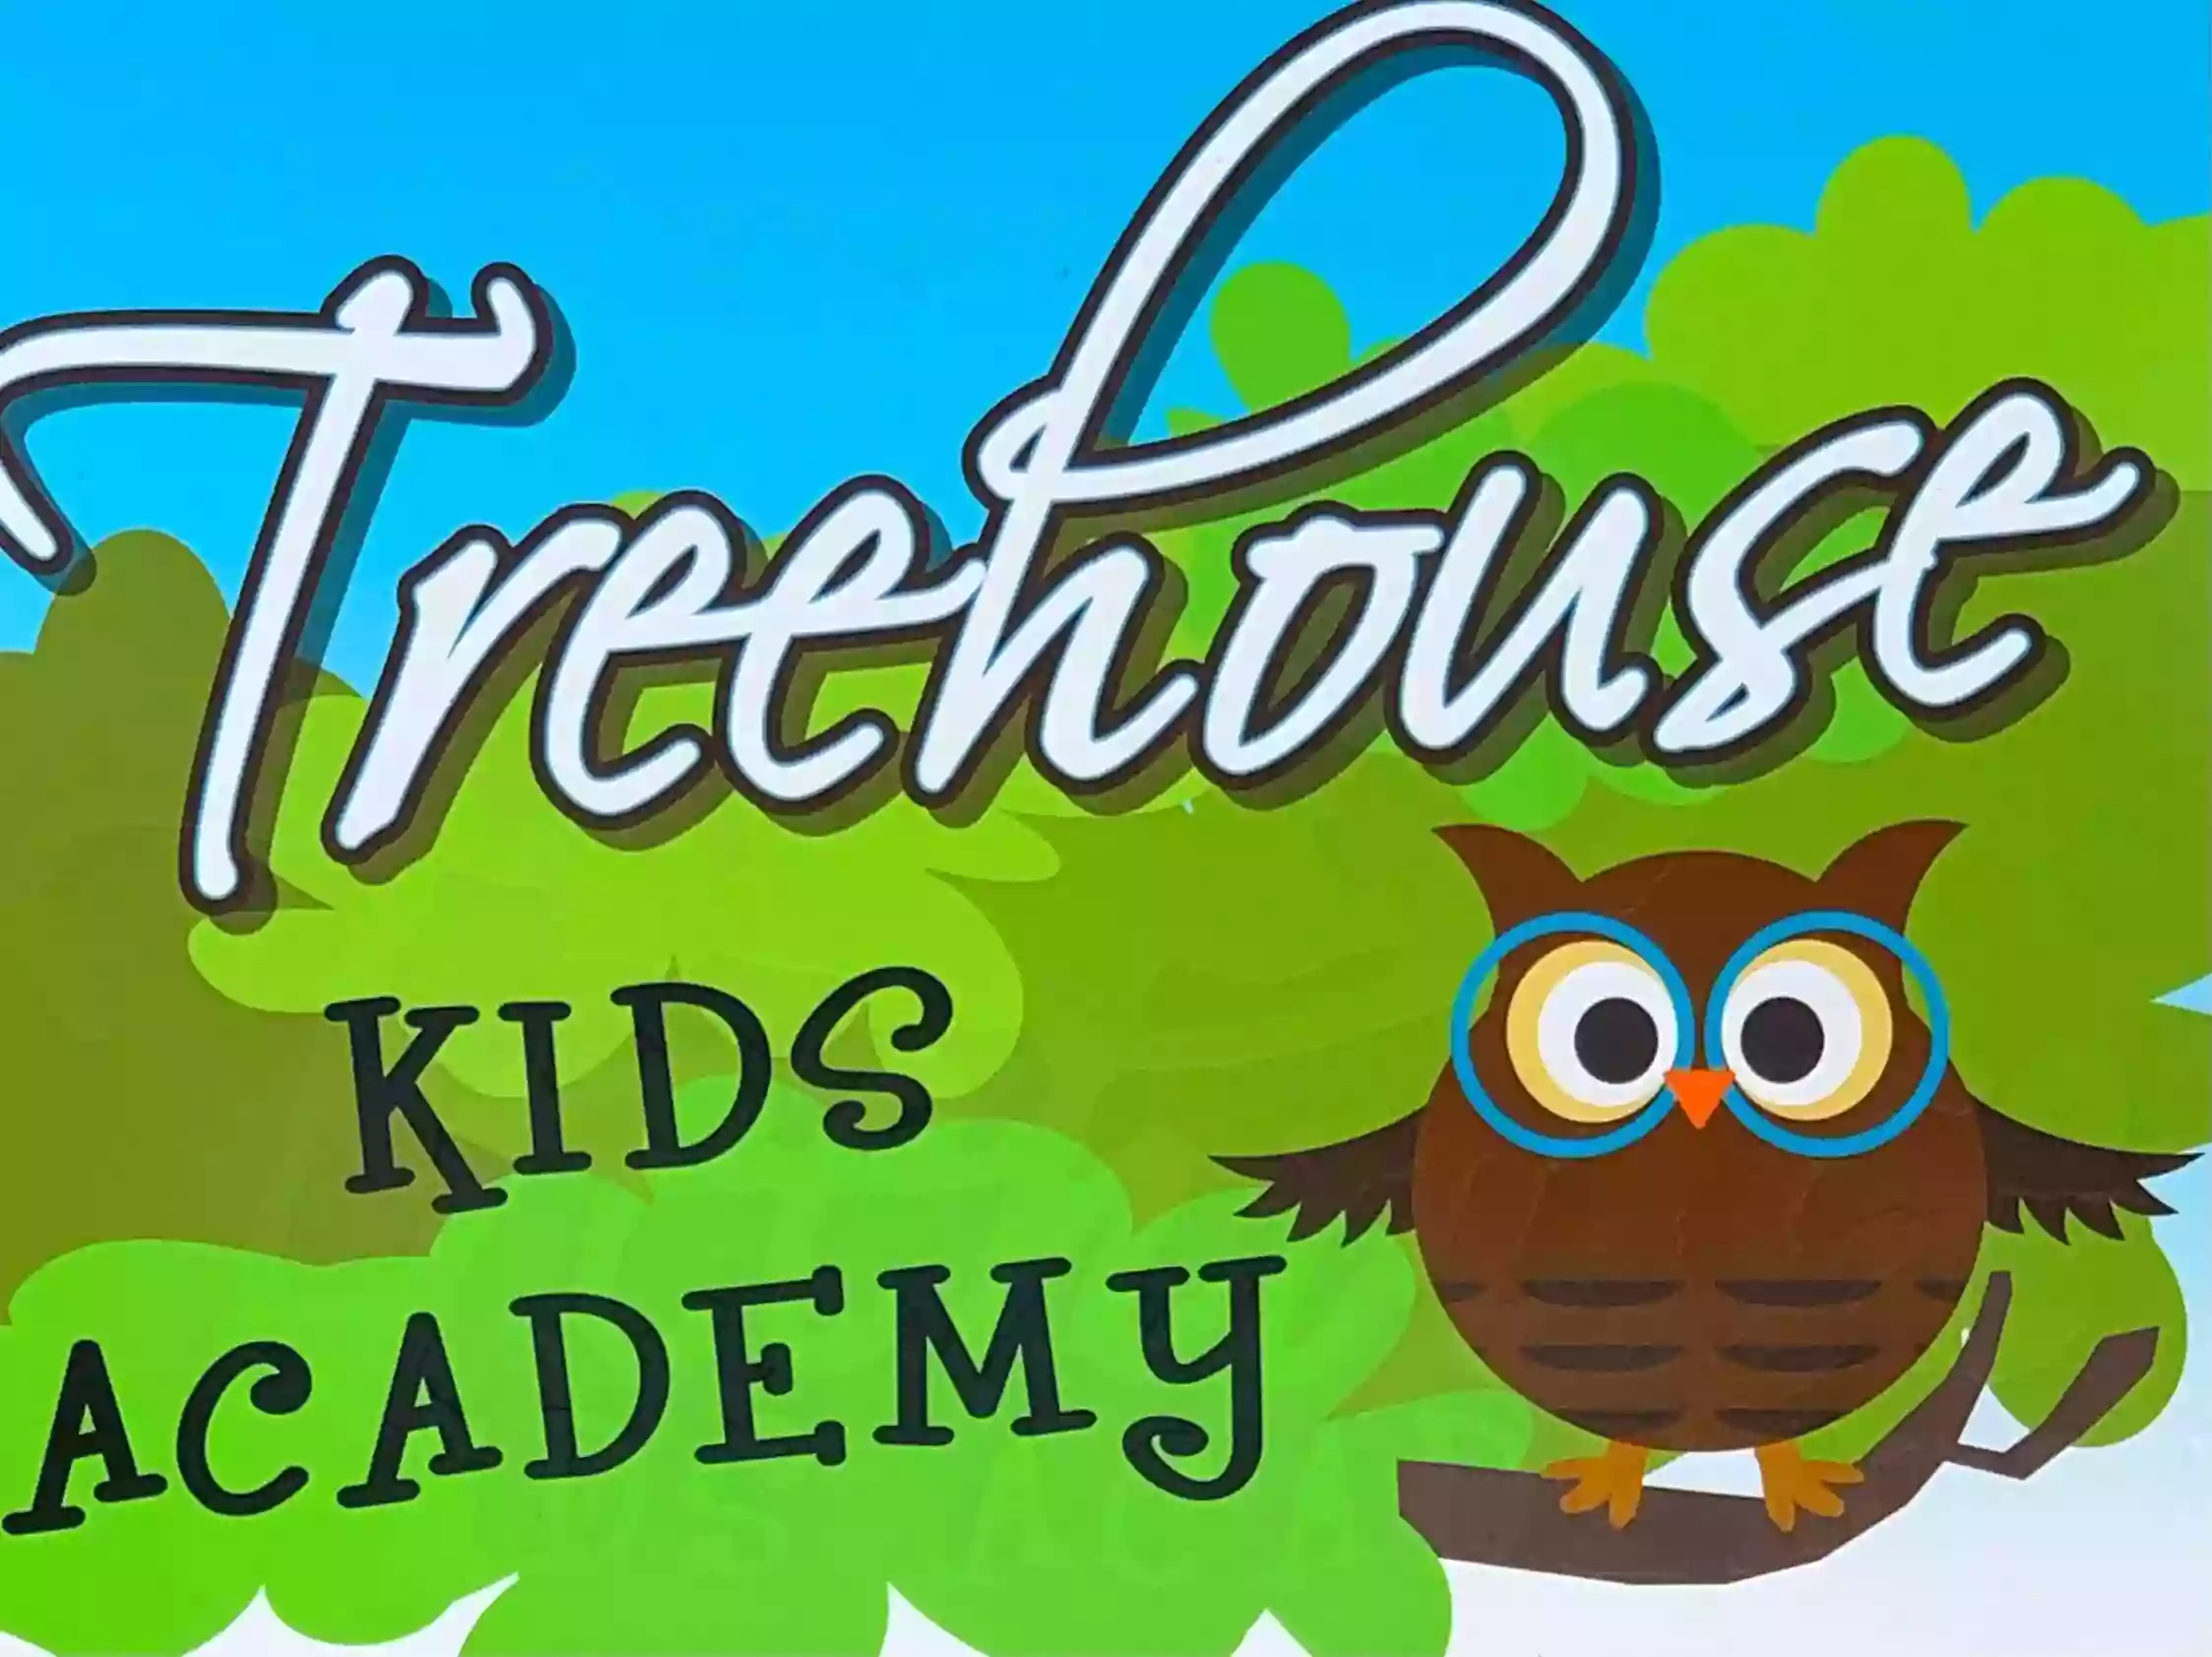 Treehouse Kids Academy